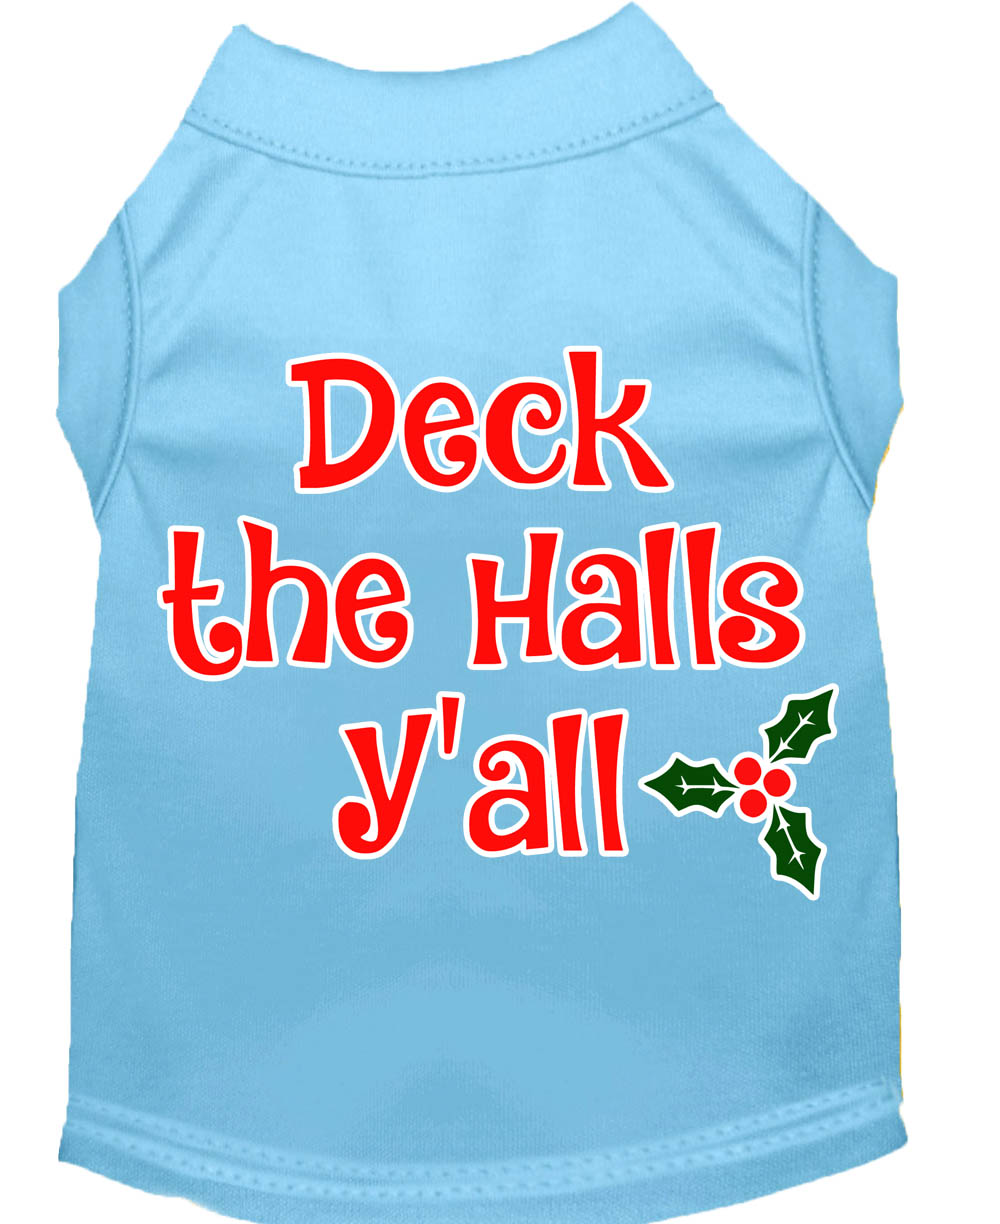 Deck the Halls Y'all Screen Print Dog Shirt Baby Blue Lg